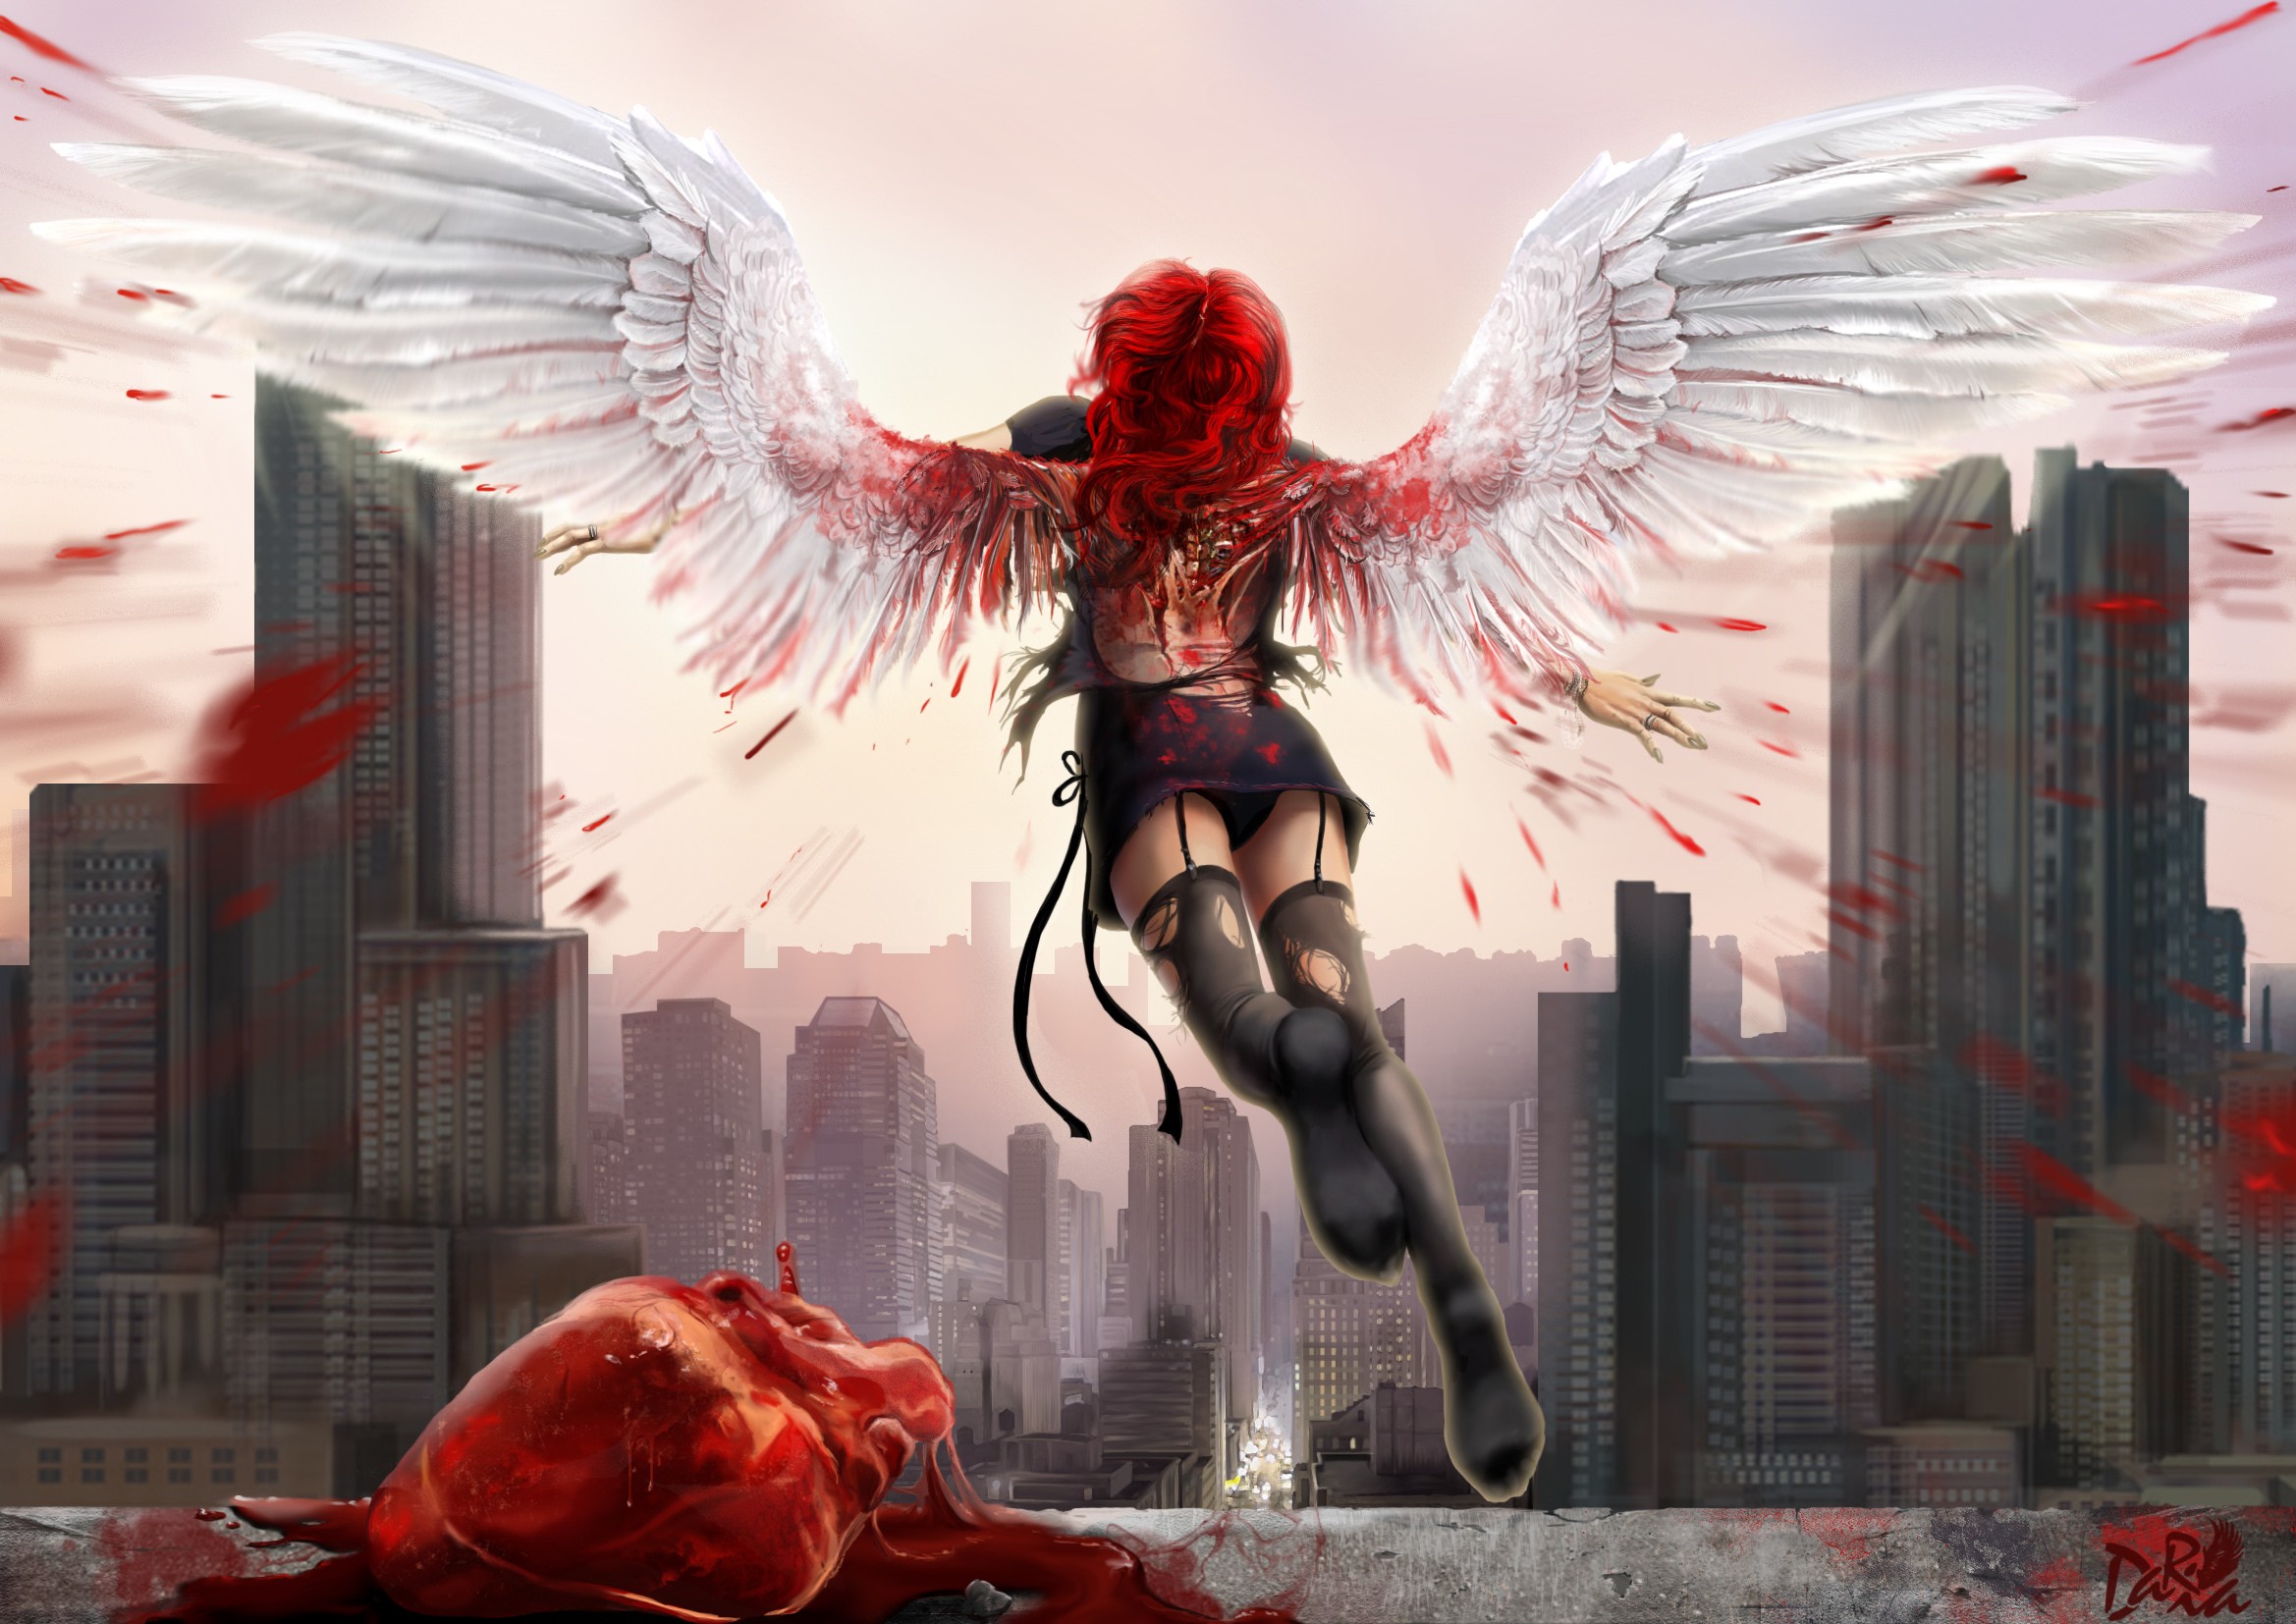 General 2338x1654 blood wings jumping women panties fantasy art redhead fantasy girl cityscape gore